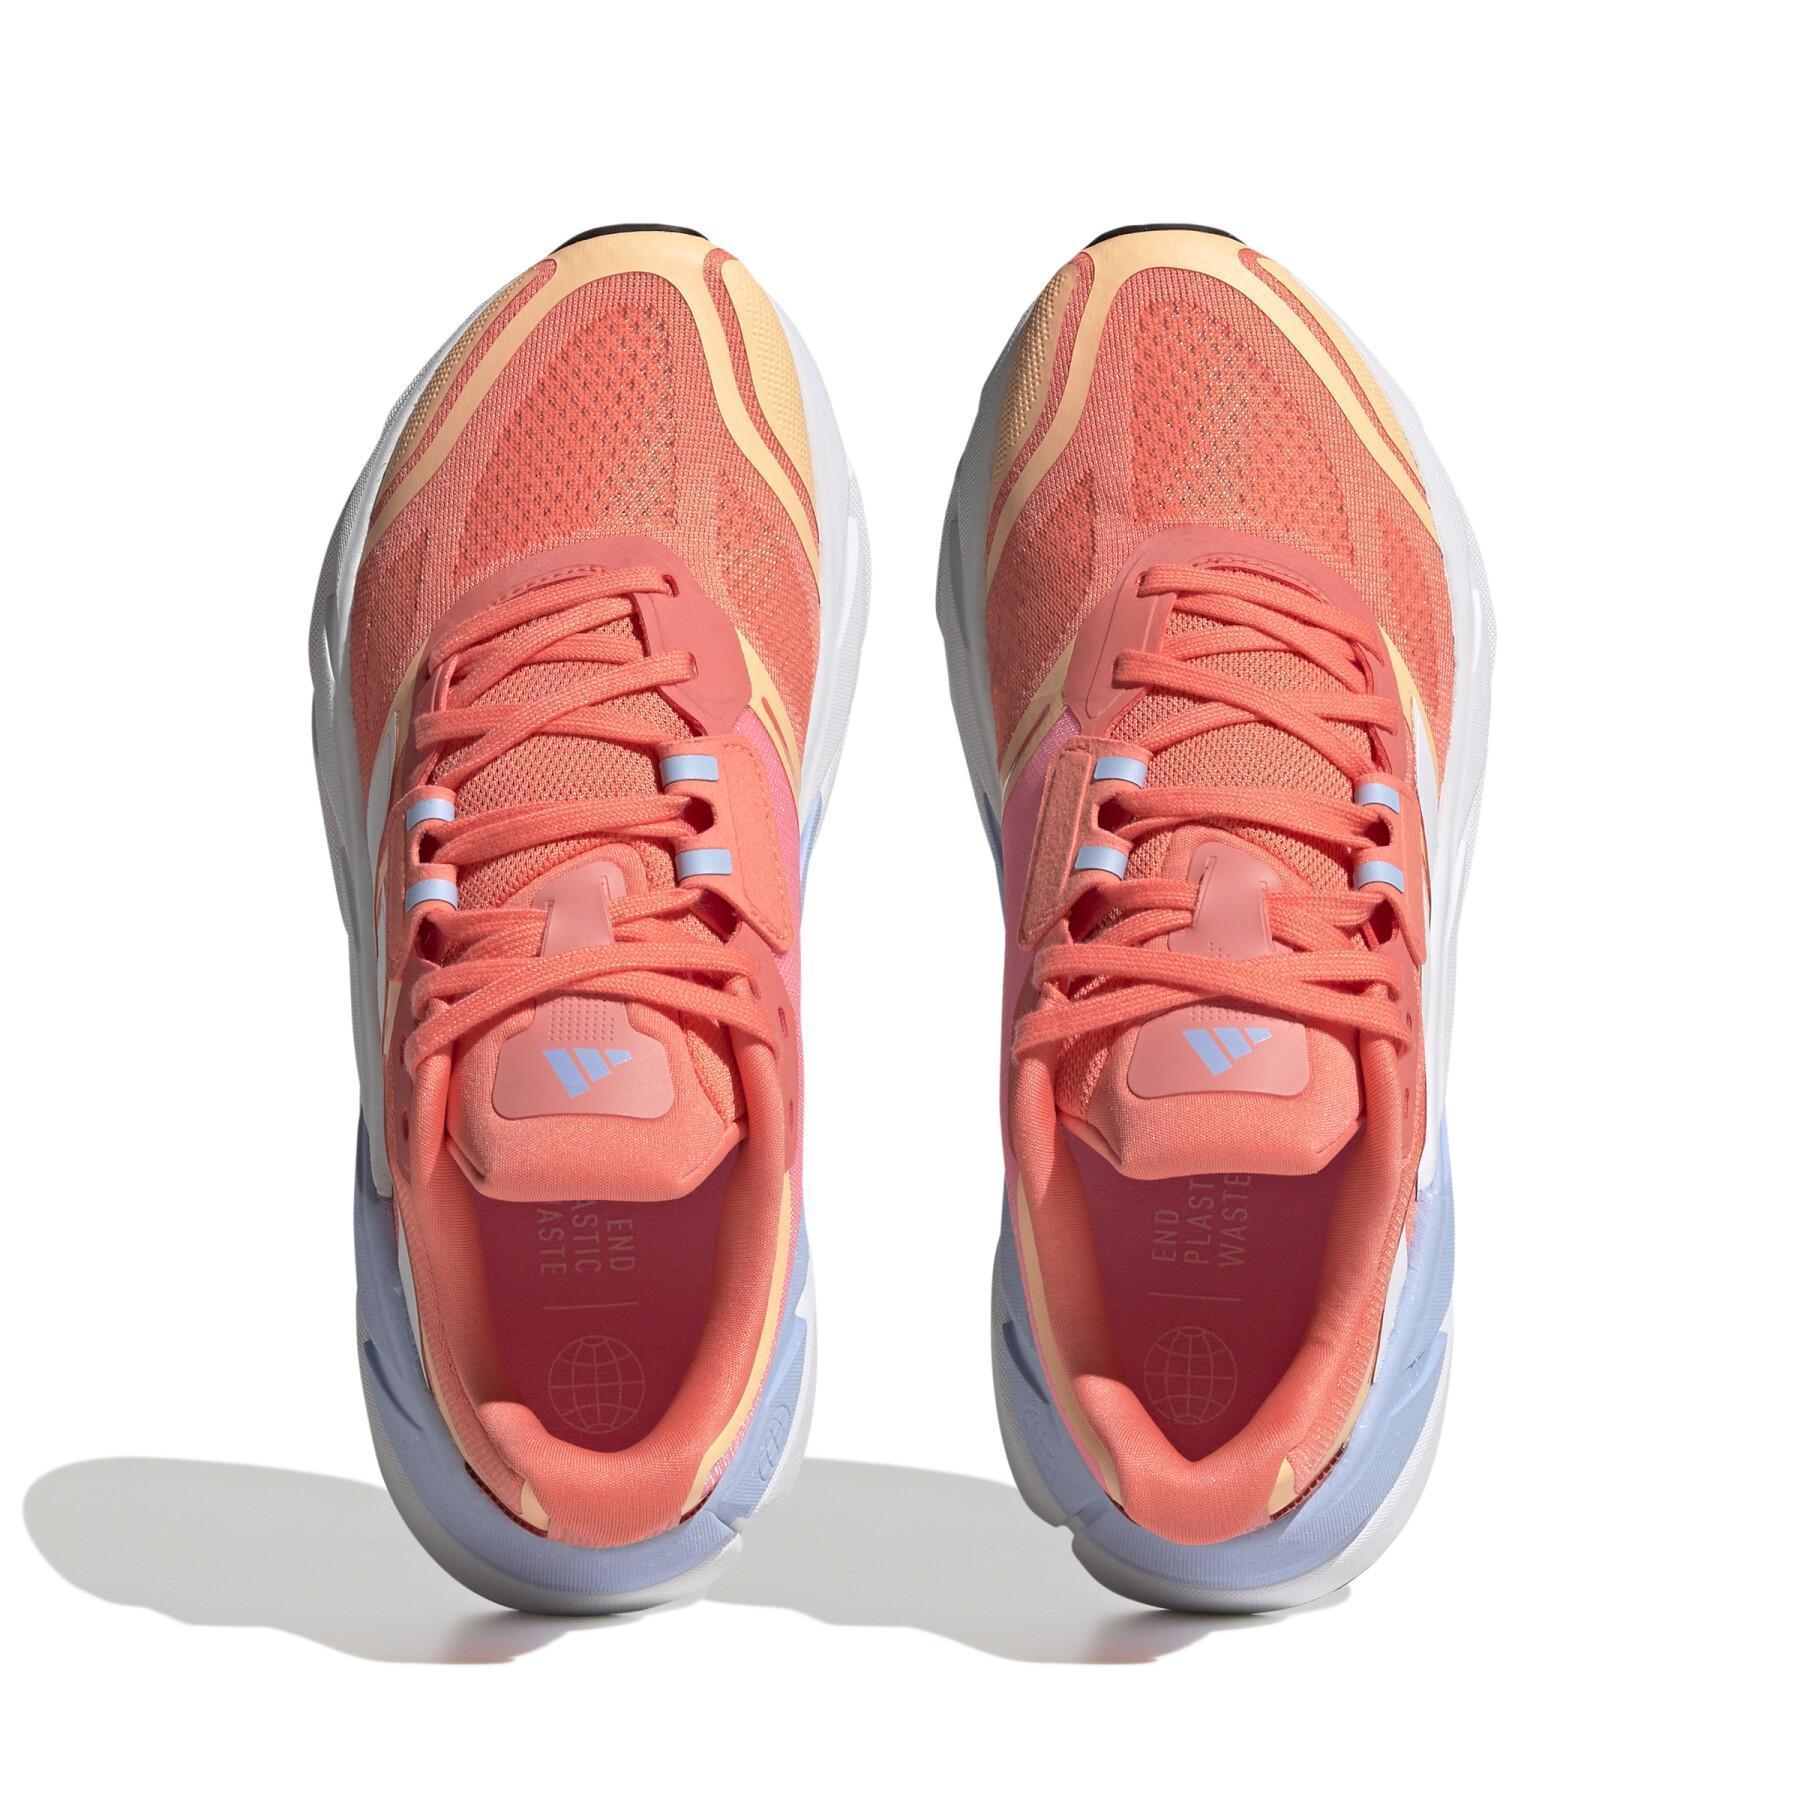 Women's running shoes adidas Adistar CS